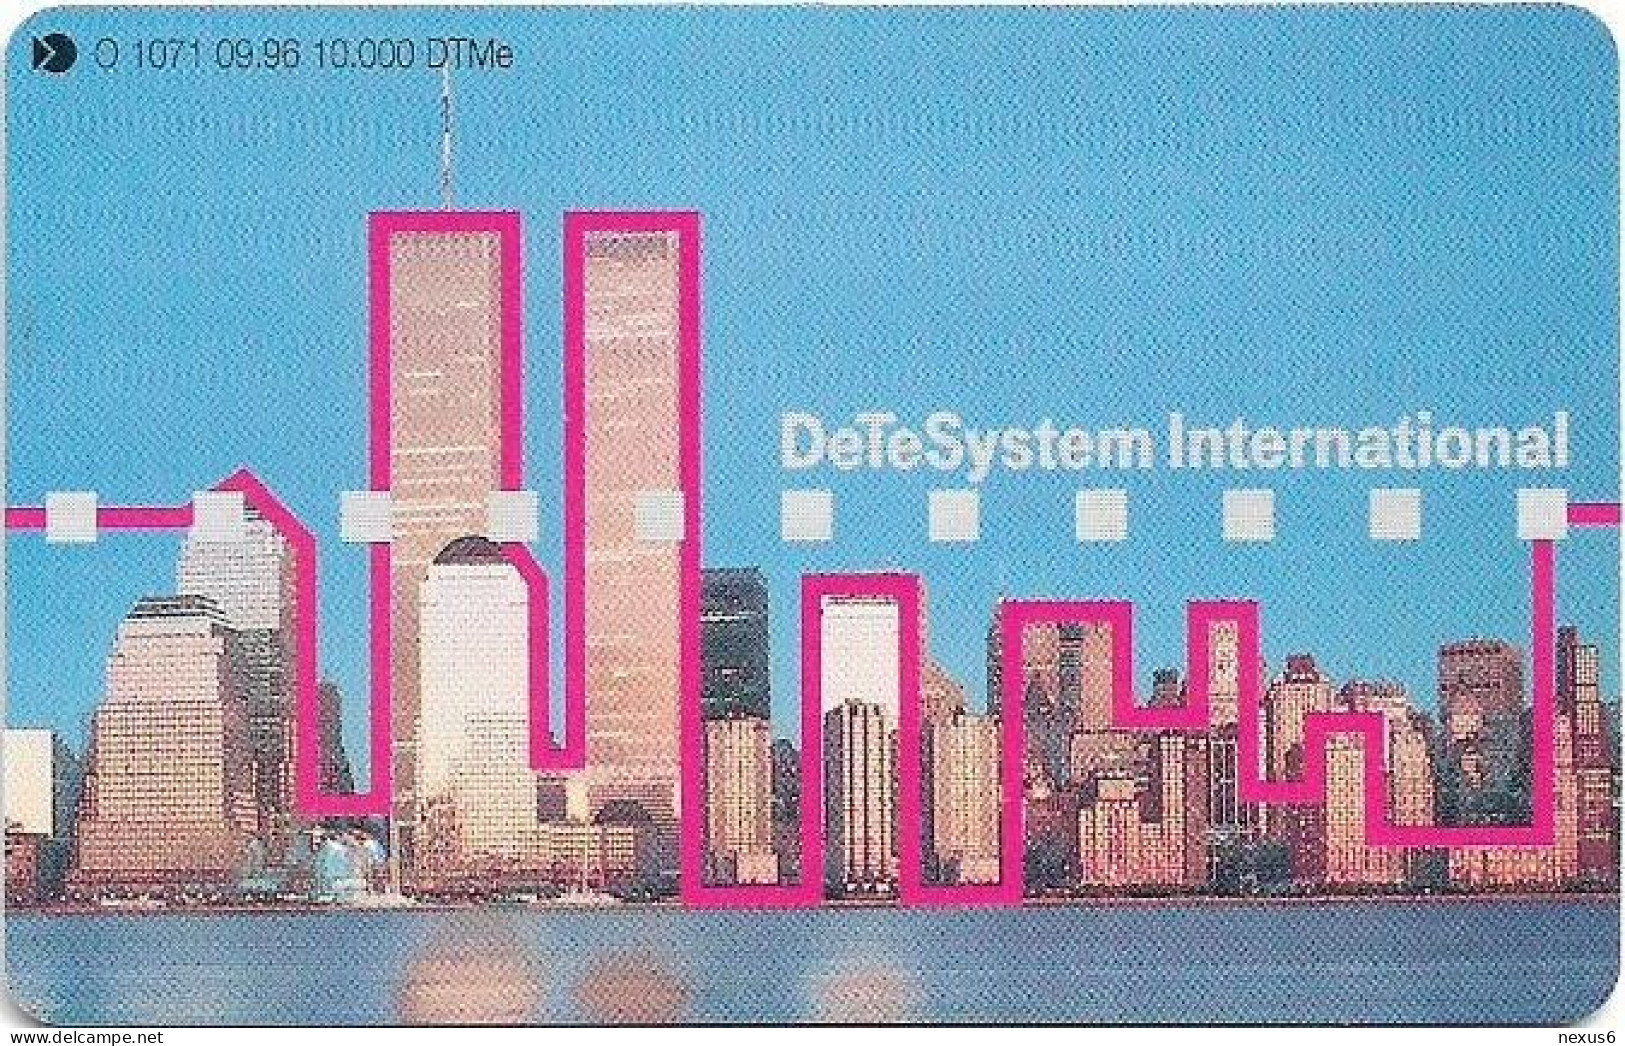 Germany - DeTeSystem International - New York - O 1071 - 09.1996, 6DM, 10.000ex, Used - O-Series: Kundenserie Vom Sammlerservice Ausgeschlossen